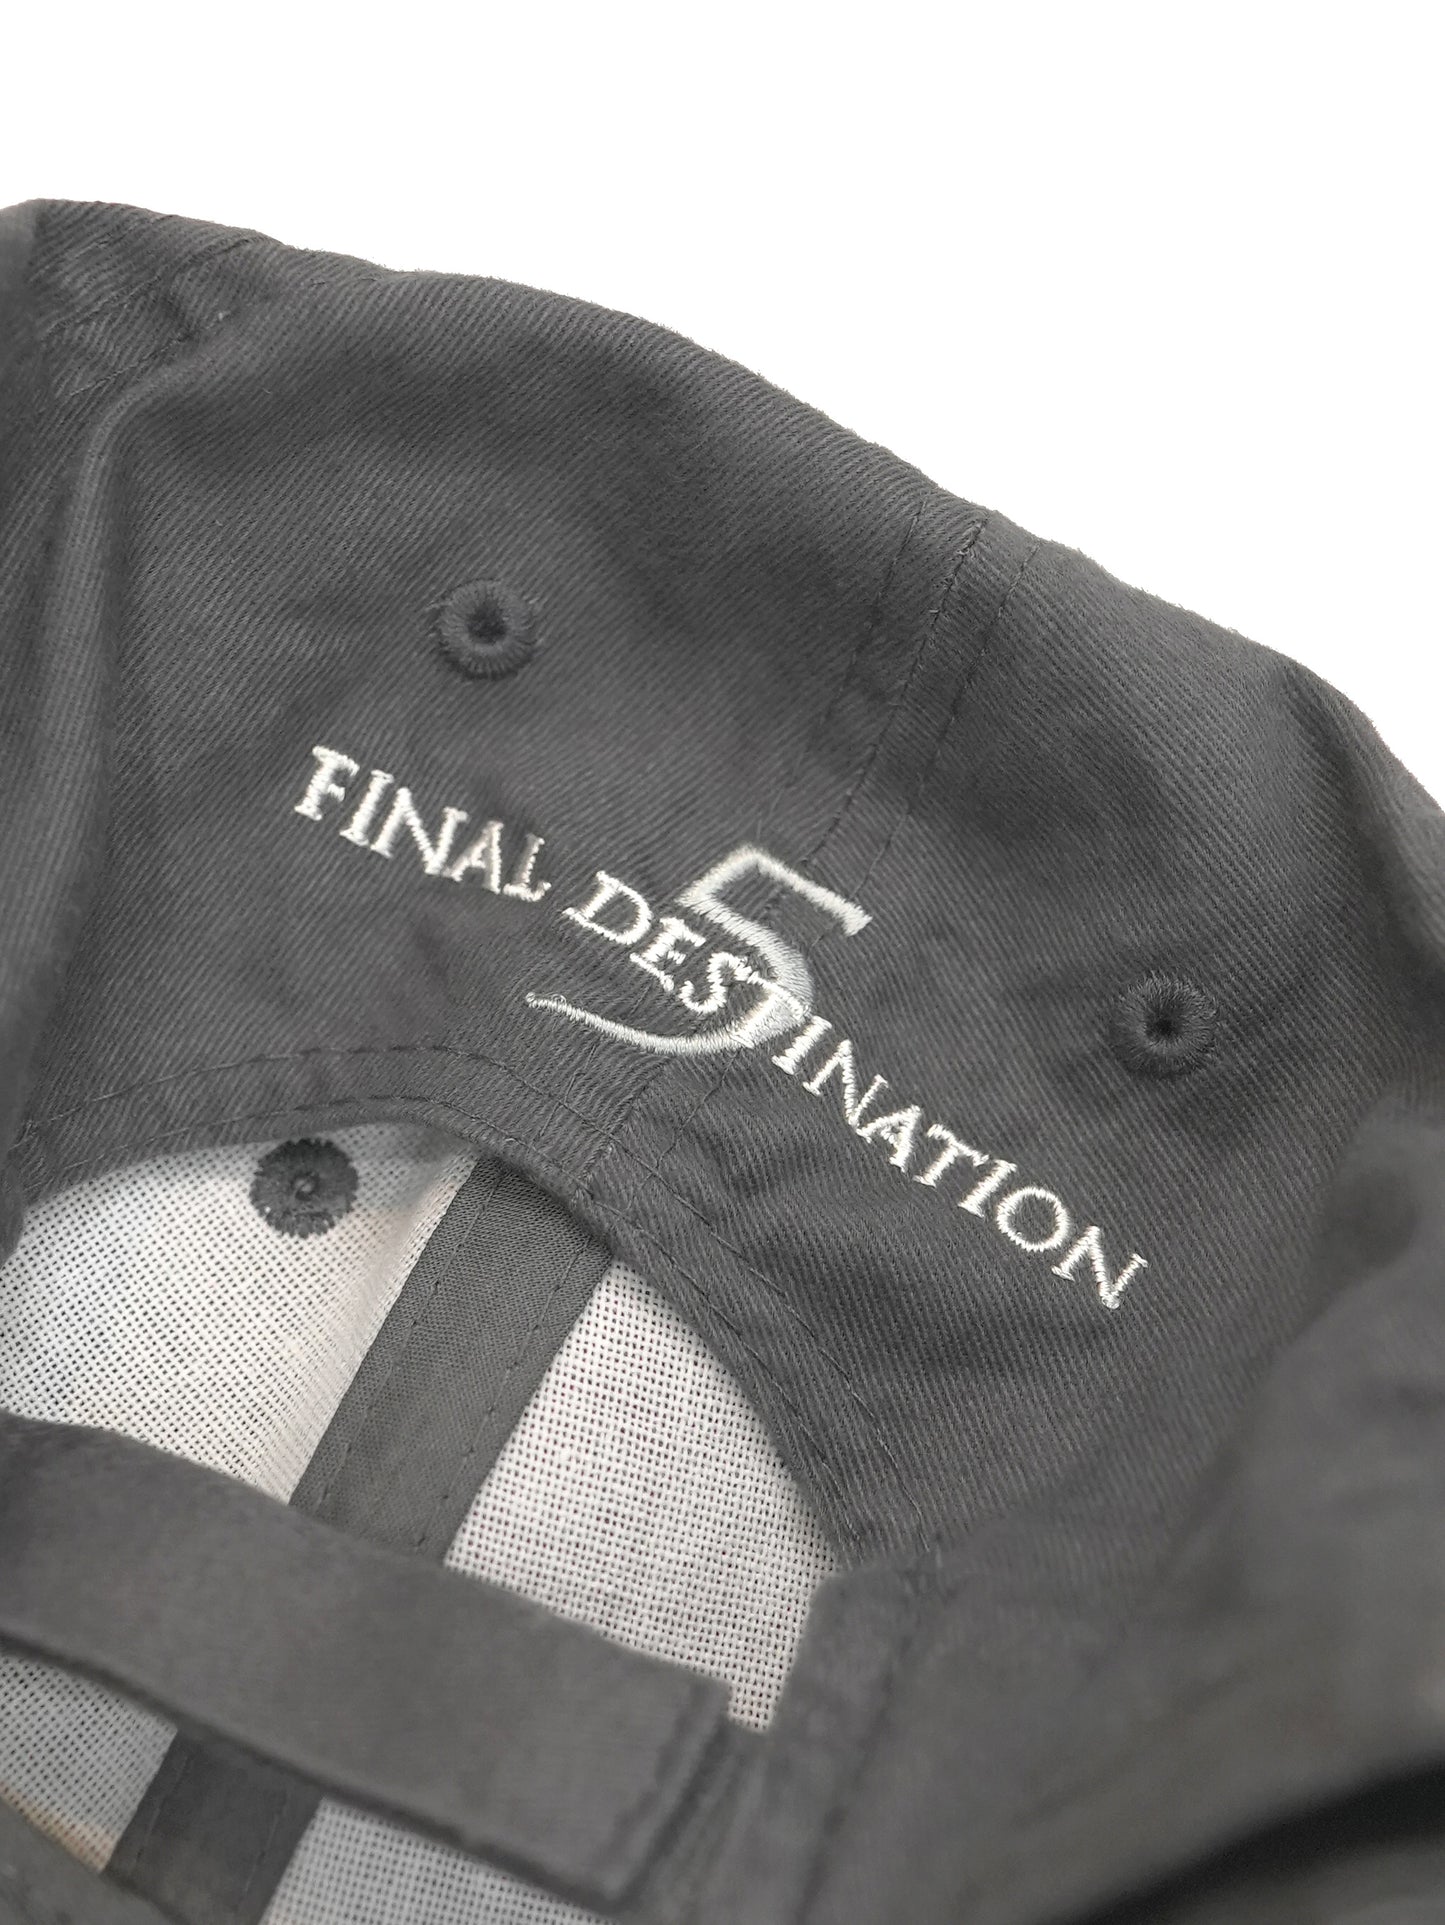 Final Destination 5 / Movie Cap